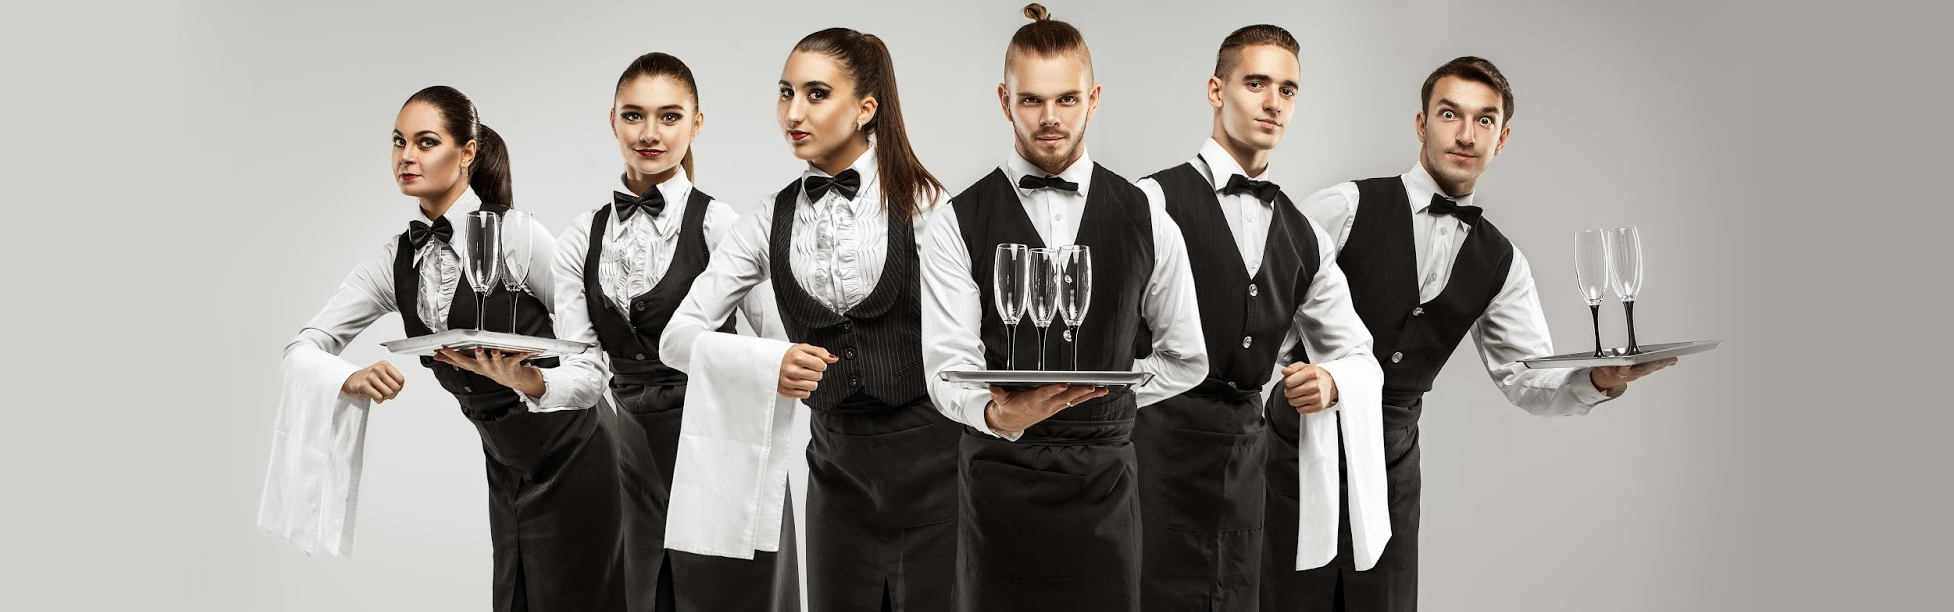 Hospitality Uniform Suppliers | Hotel Staff Uniform